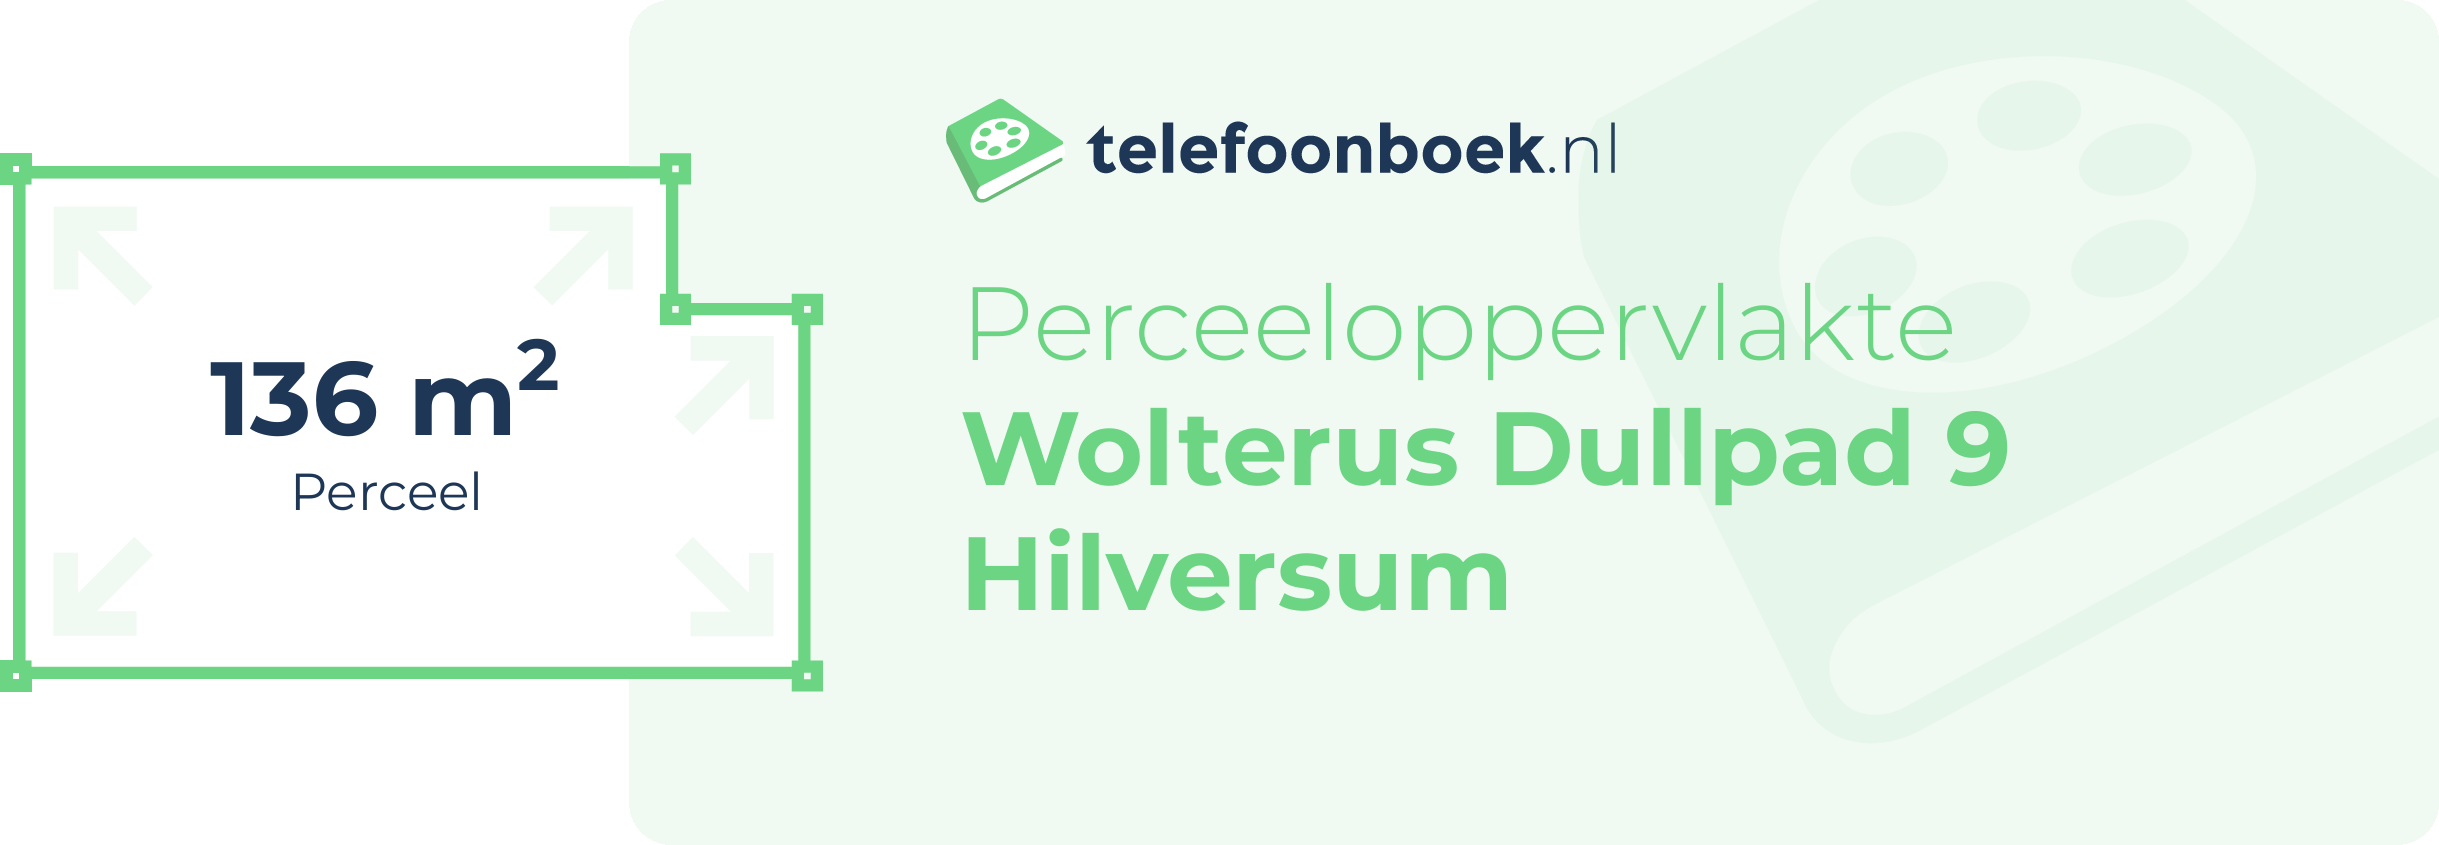 Perceeloppervlakte Wolterus Dullpad 9 Hilversum